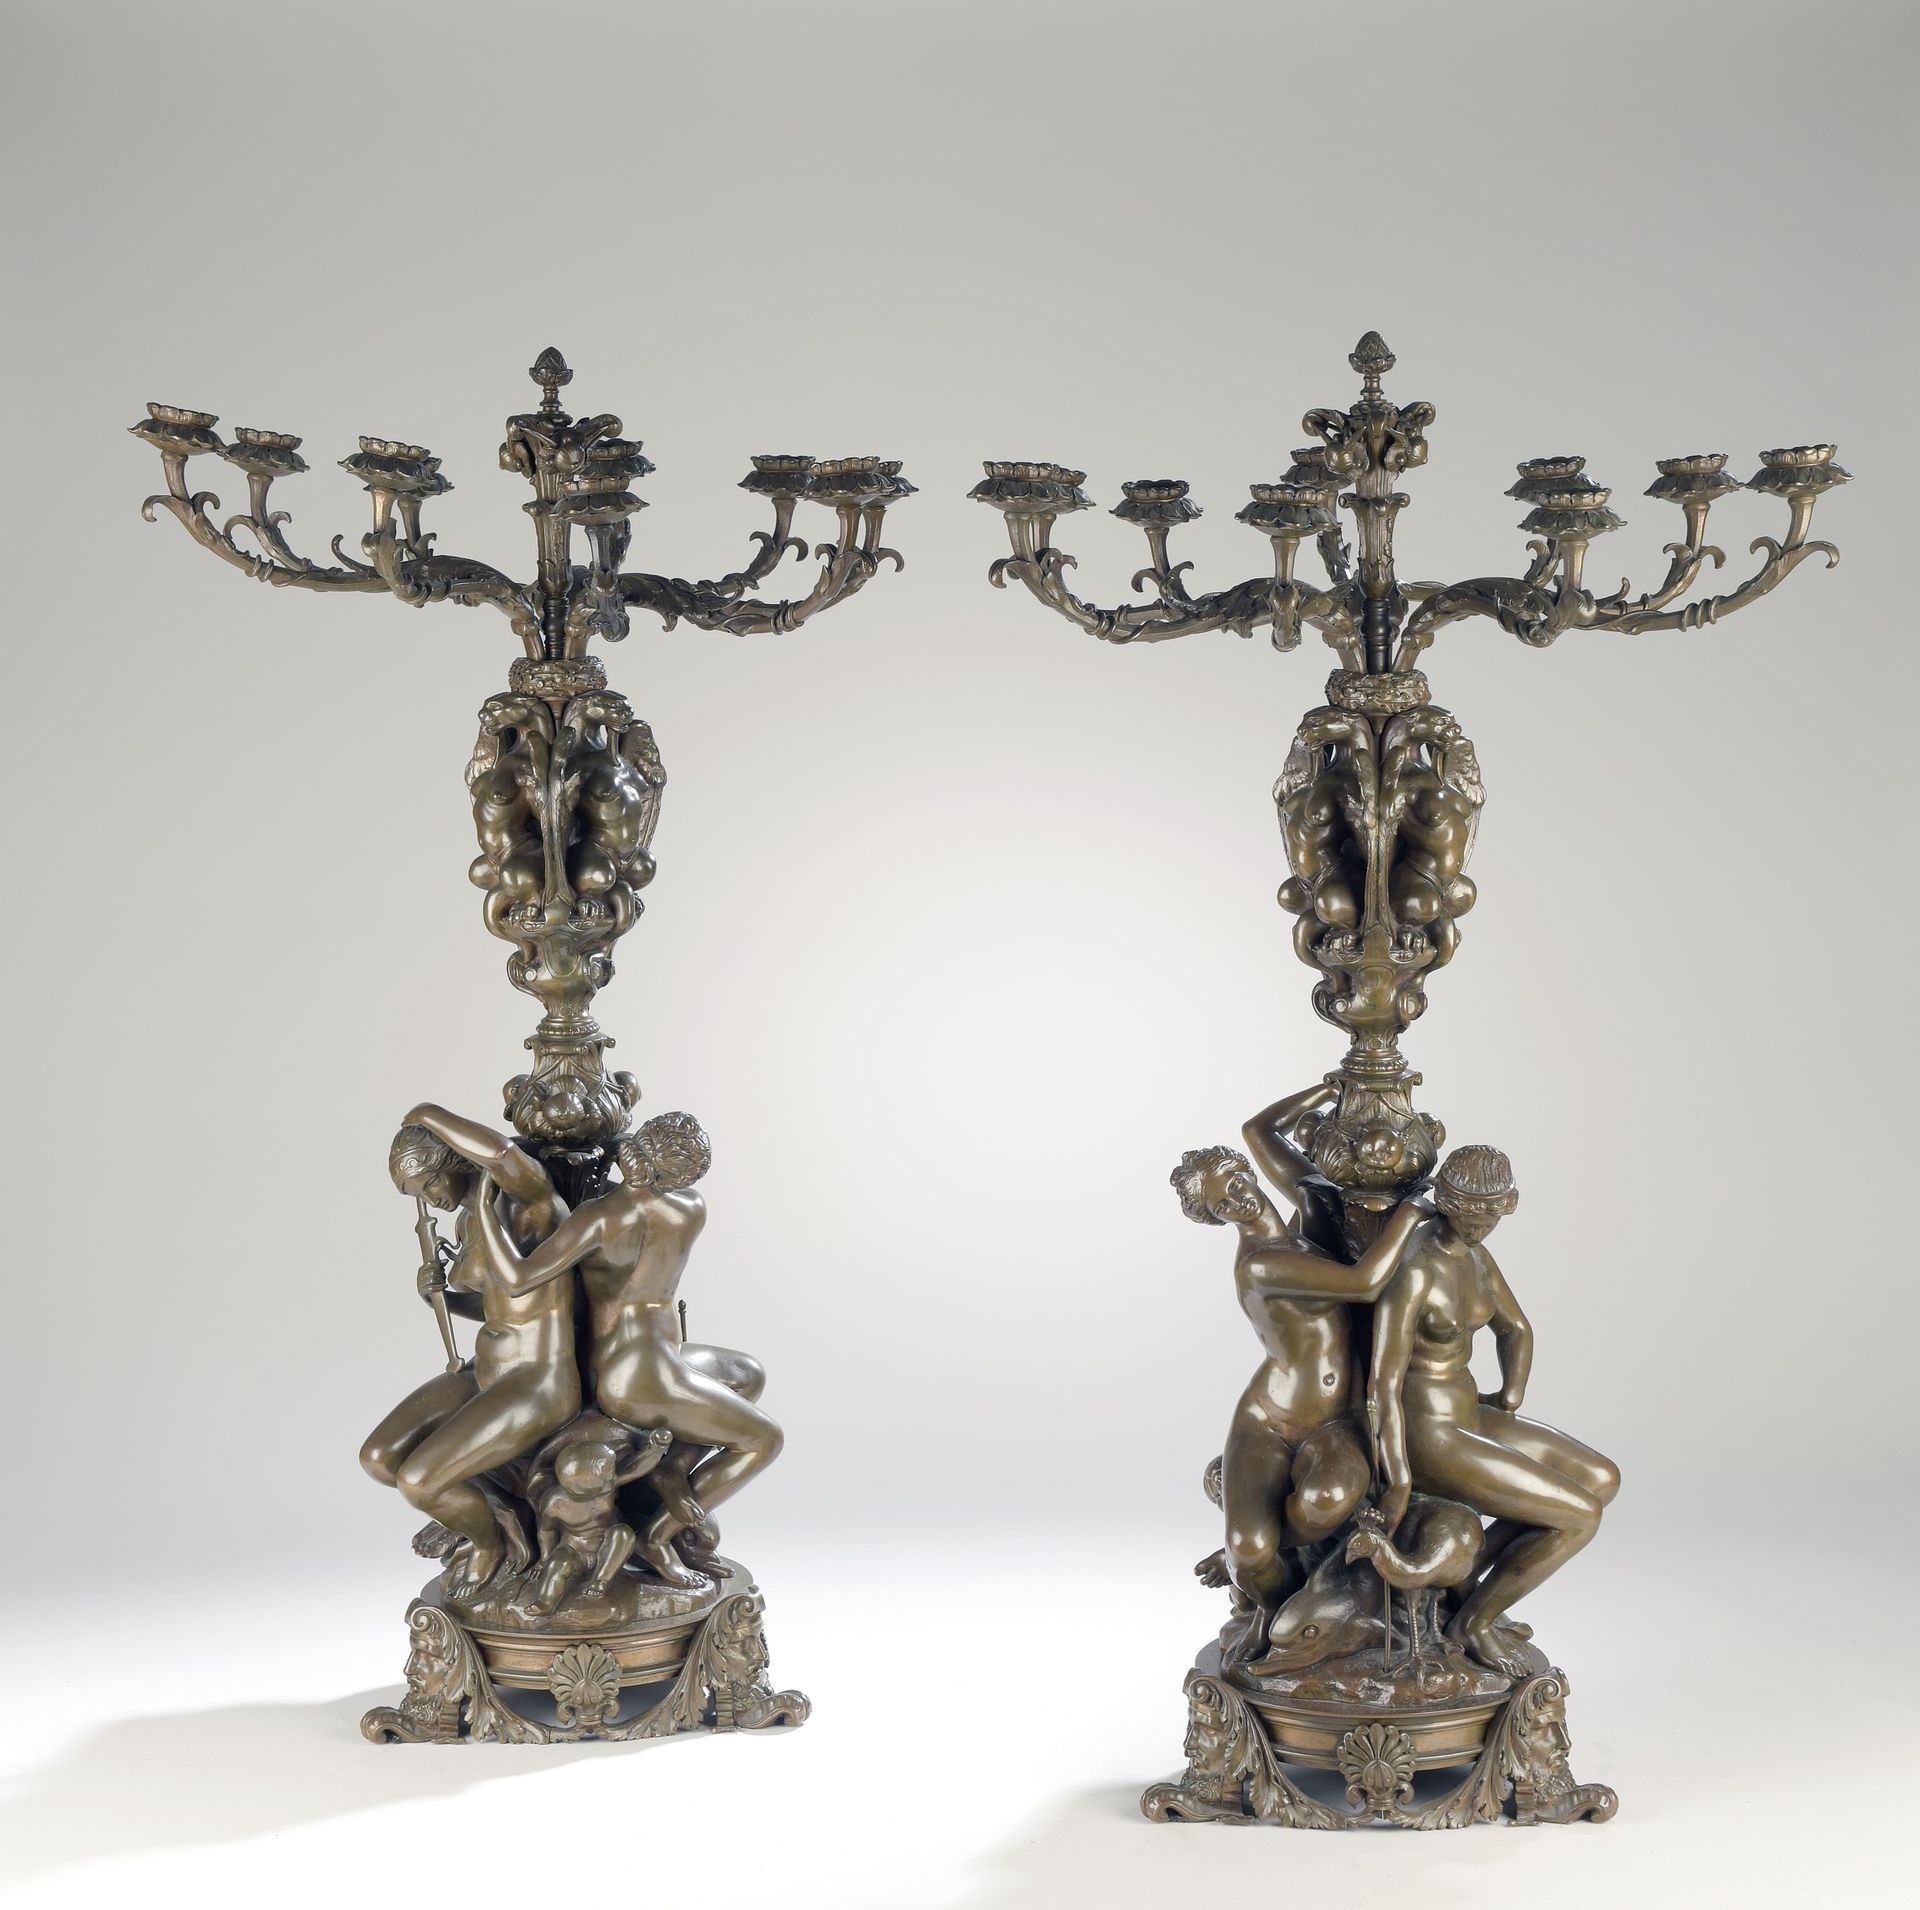 Null 安托万-路易-巴耶(1795-1875)
九灯烛台
一对红褐色青铜器 平台上有 "BARYE "的签名
H.71厘米

相关作品： 
安托万-路易-巴&hellip;